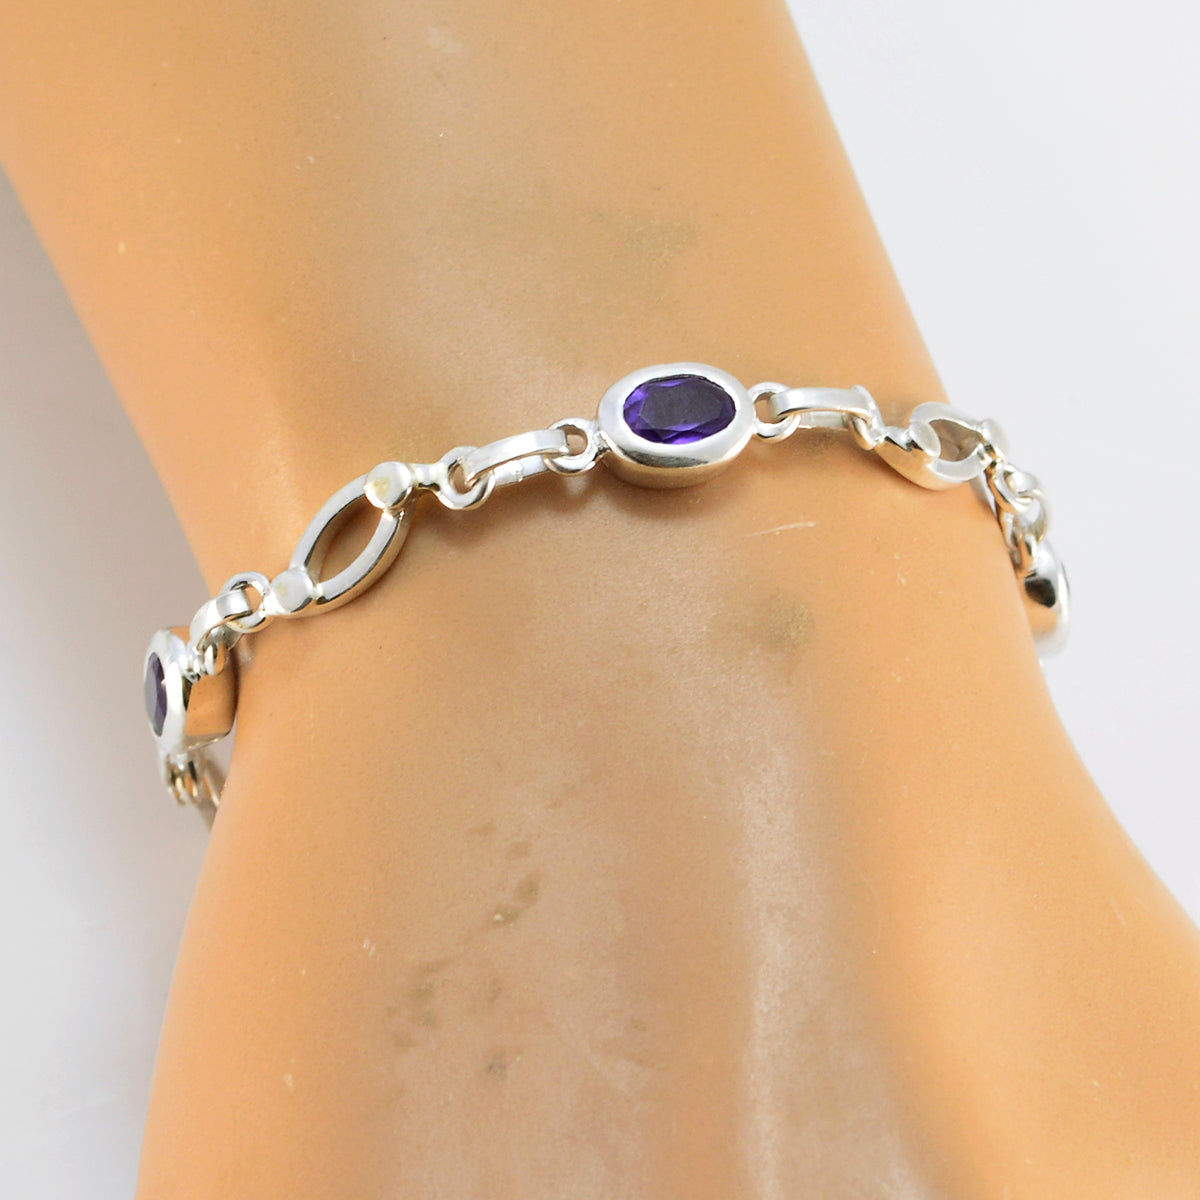 Riyo Real Gemstones Oval Faceted Purple Amethyst Silver Bracelet gift for independence